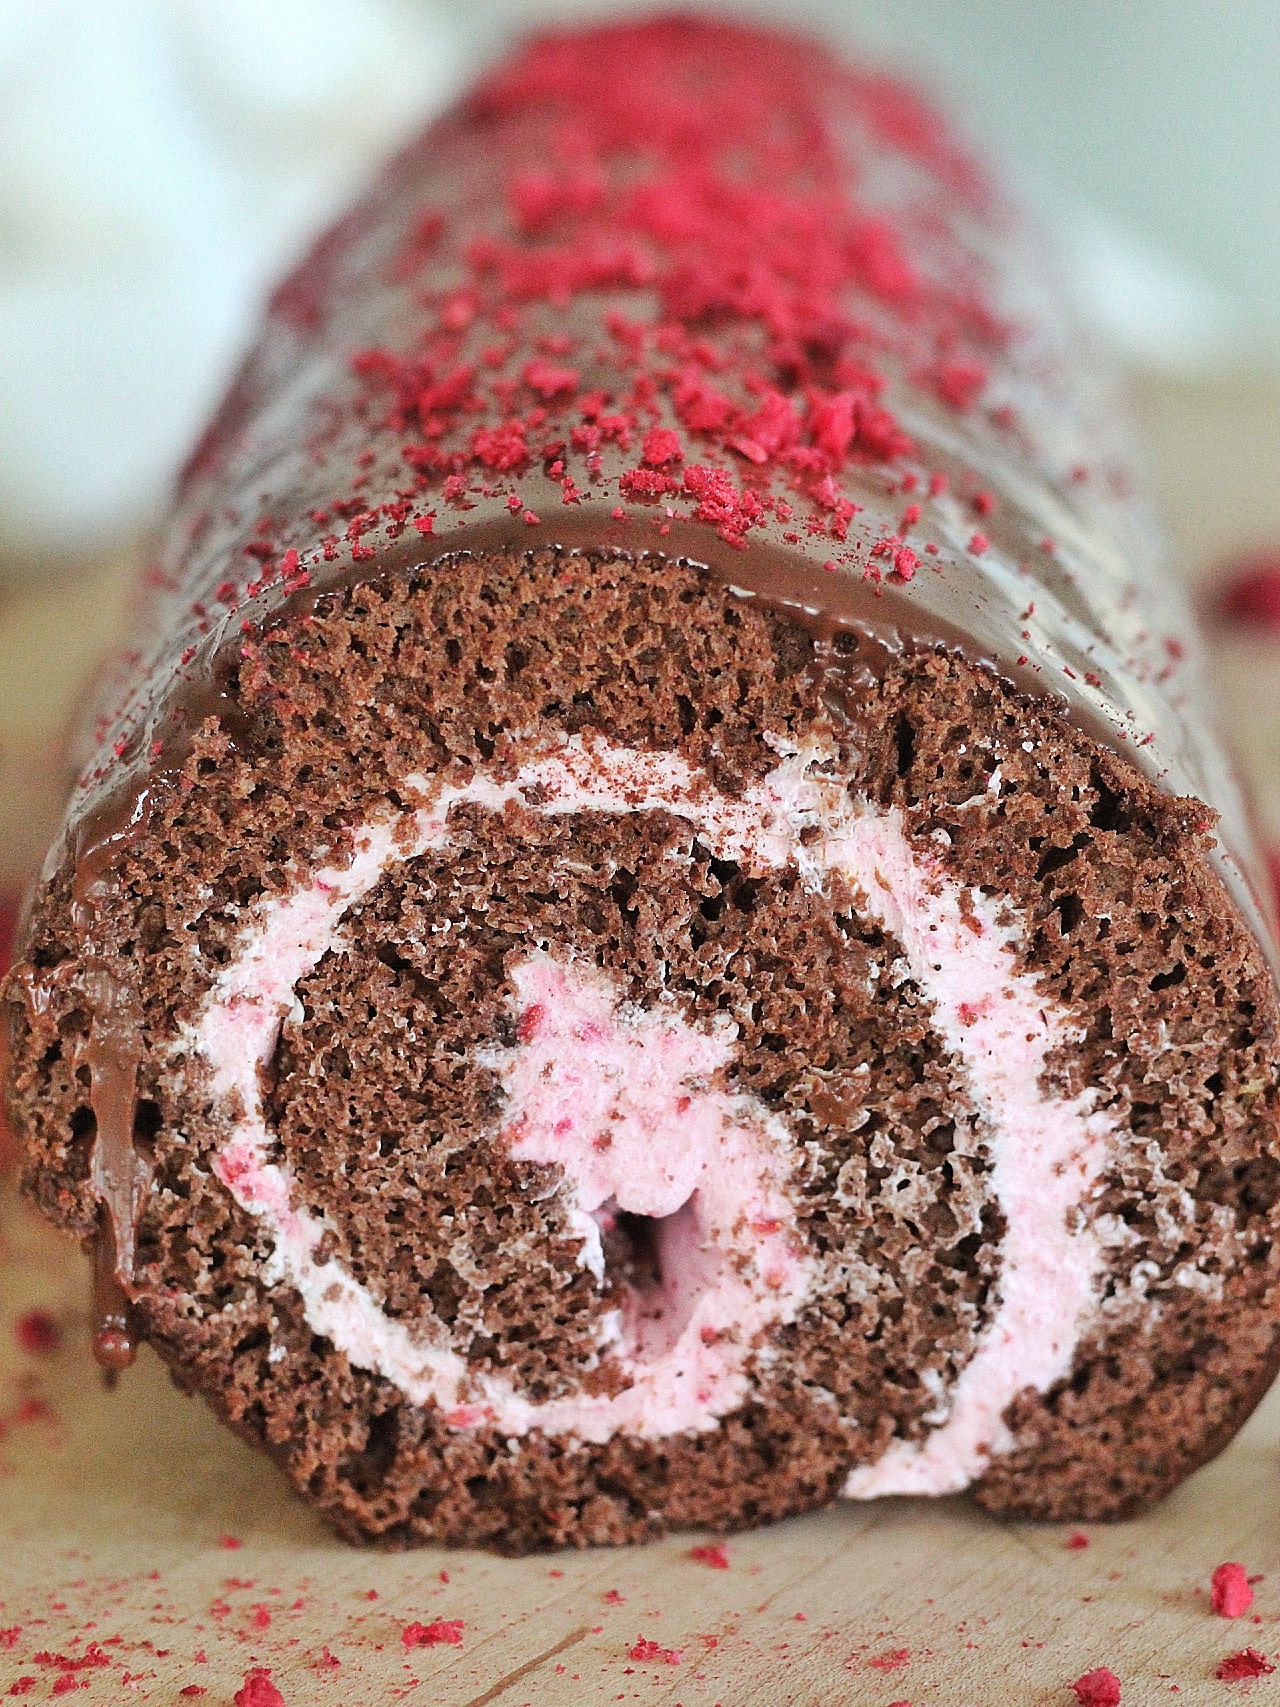 Chocolate Raspberry Swiss Roll - chocolate sponge cake with raspberry whipped cream and chocolate ganache. #cakebycourtney #cake #swissroll #spongecake #cakerollrecipe #cakeroll #howtomakeacakeroll #raspberry #whippedcream